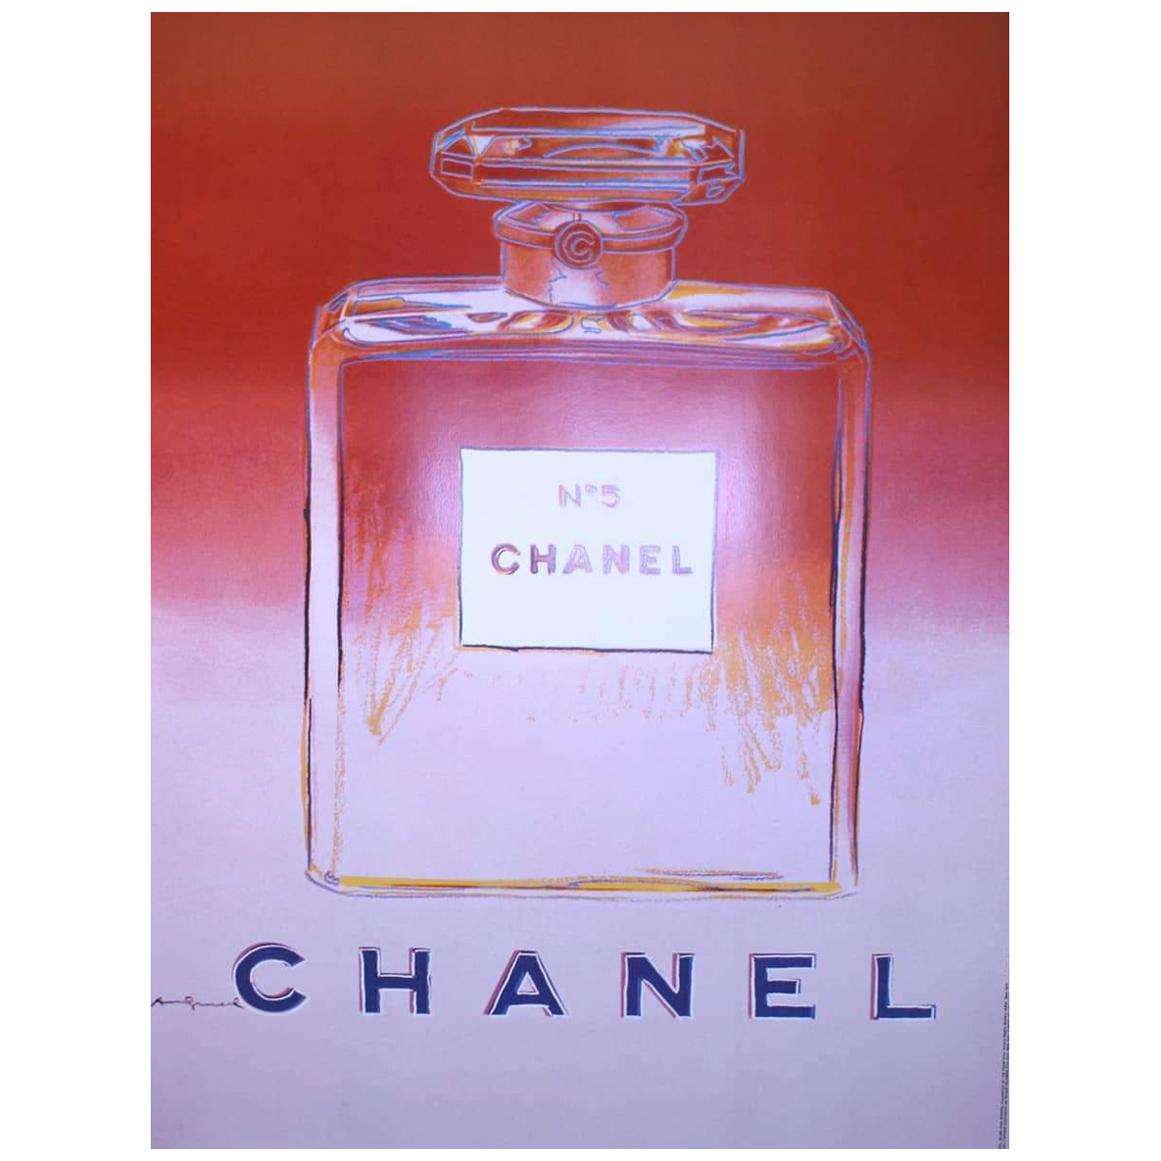 Chanel Nº 5 Original Poster